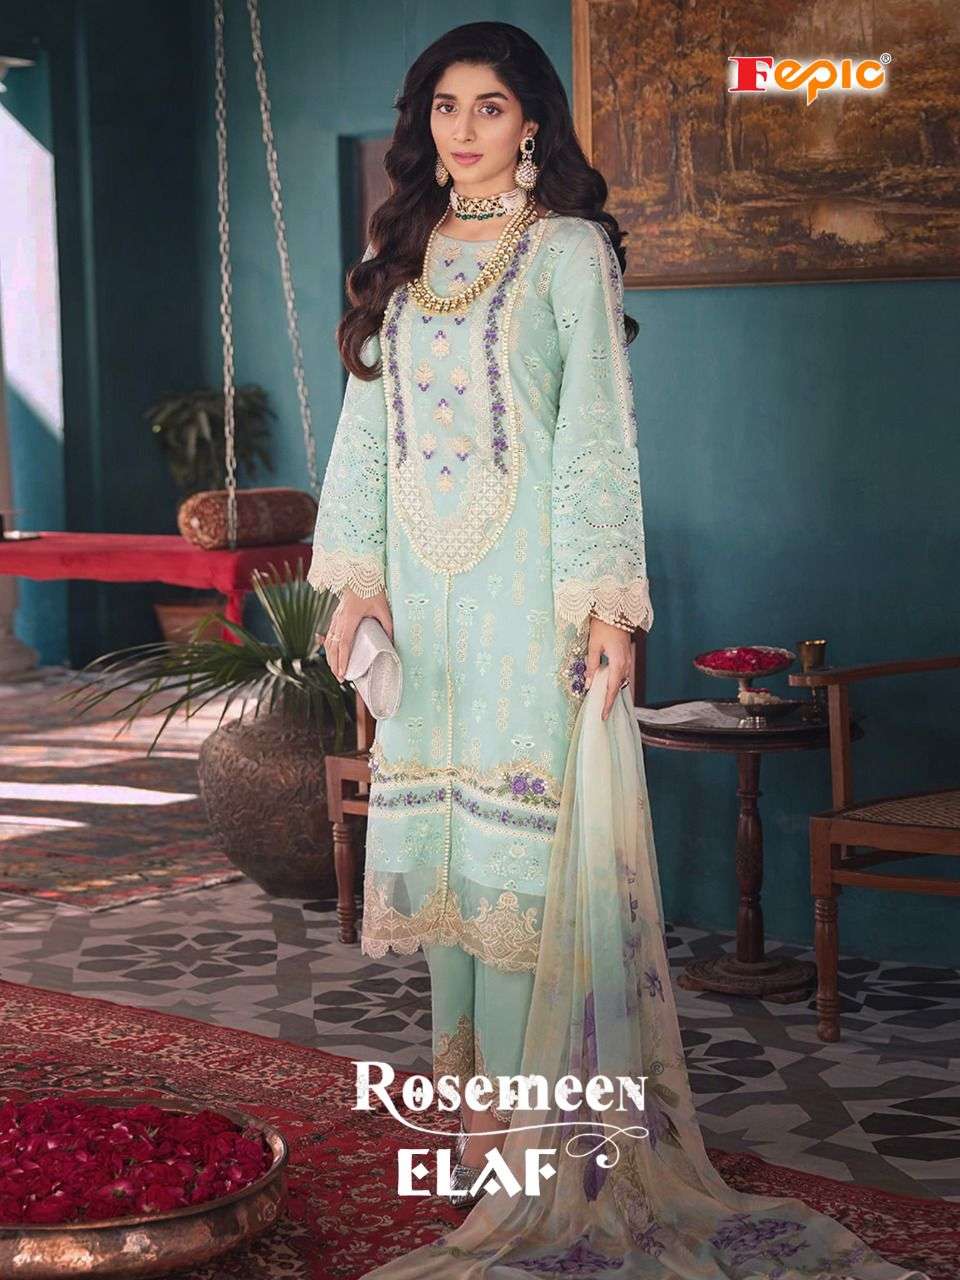 rosemeen elaf by fepic cotton pakistani designer suits